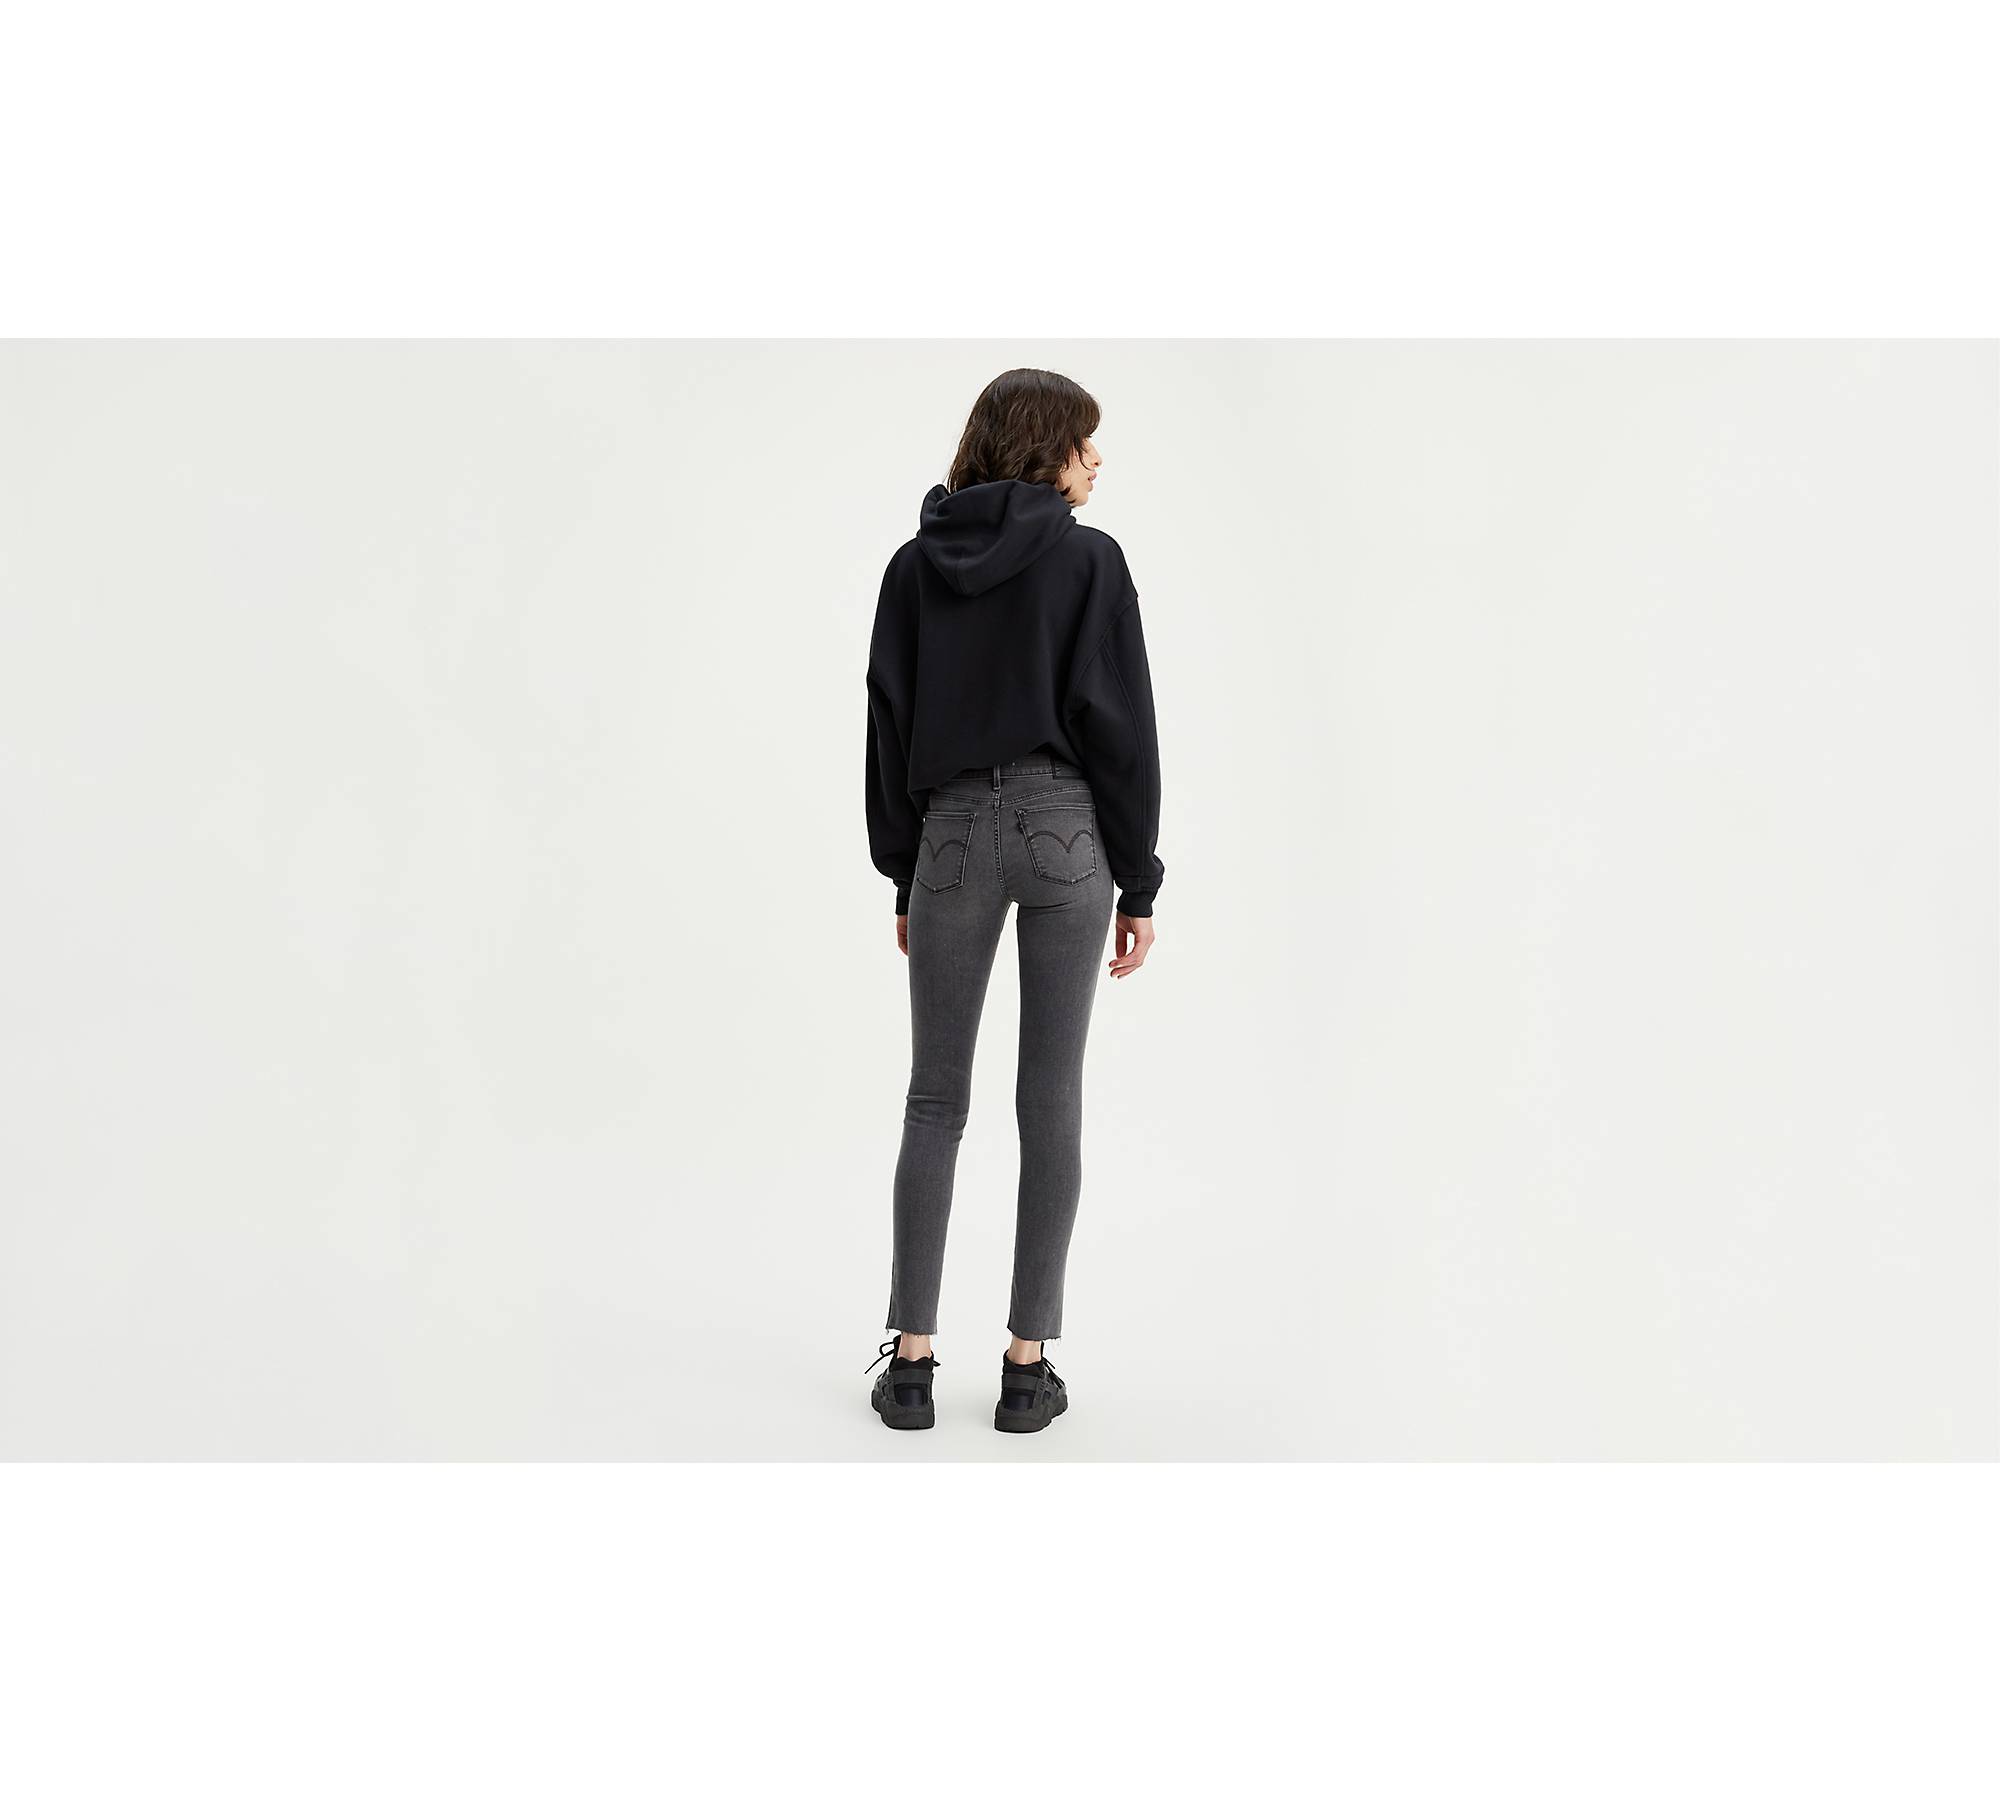 Levis Womens 710 Super Skinny Sateen Jeans, Choose Sz/Color: 31